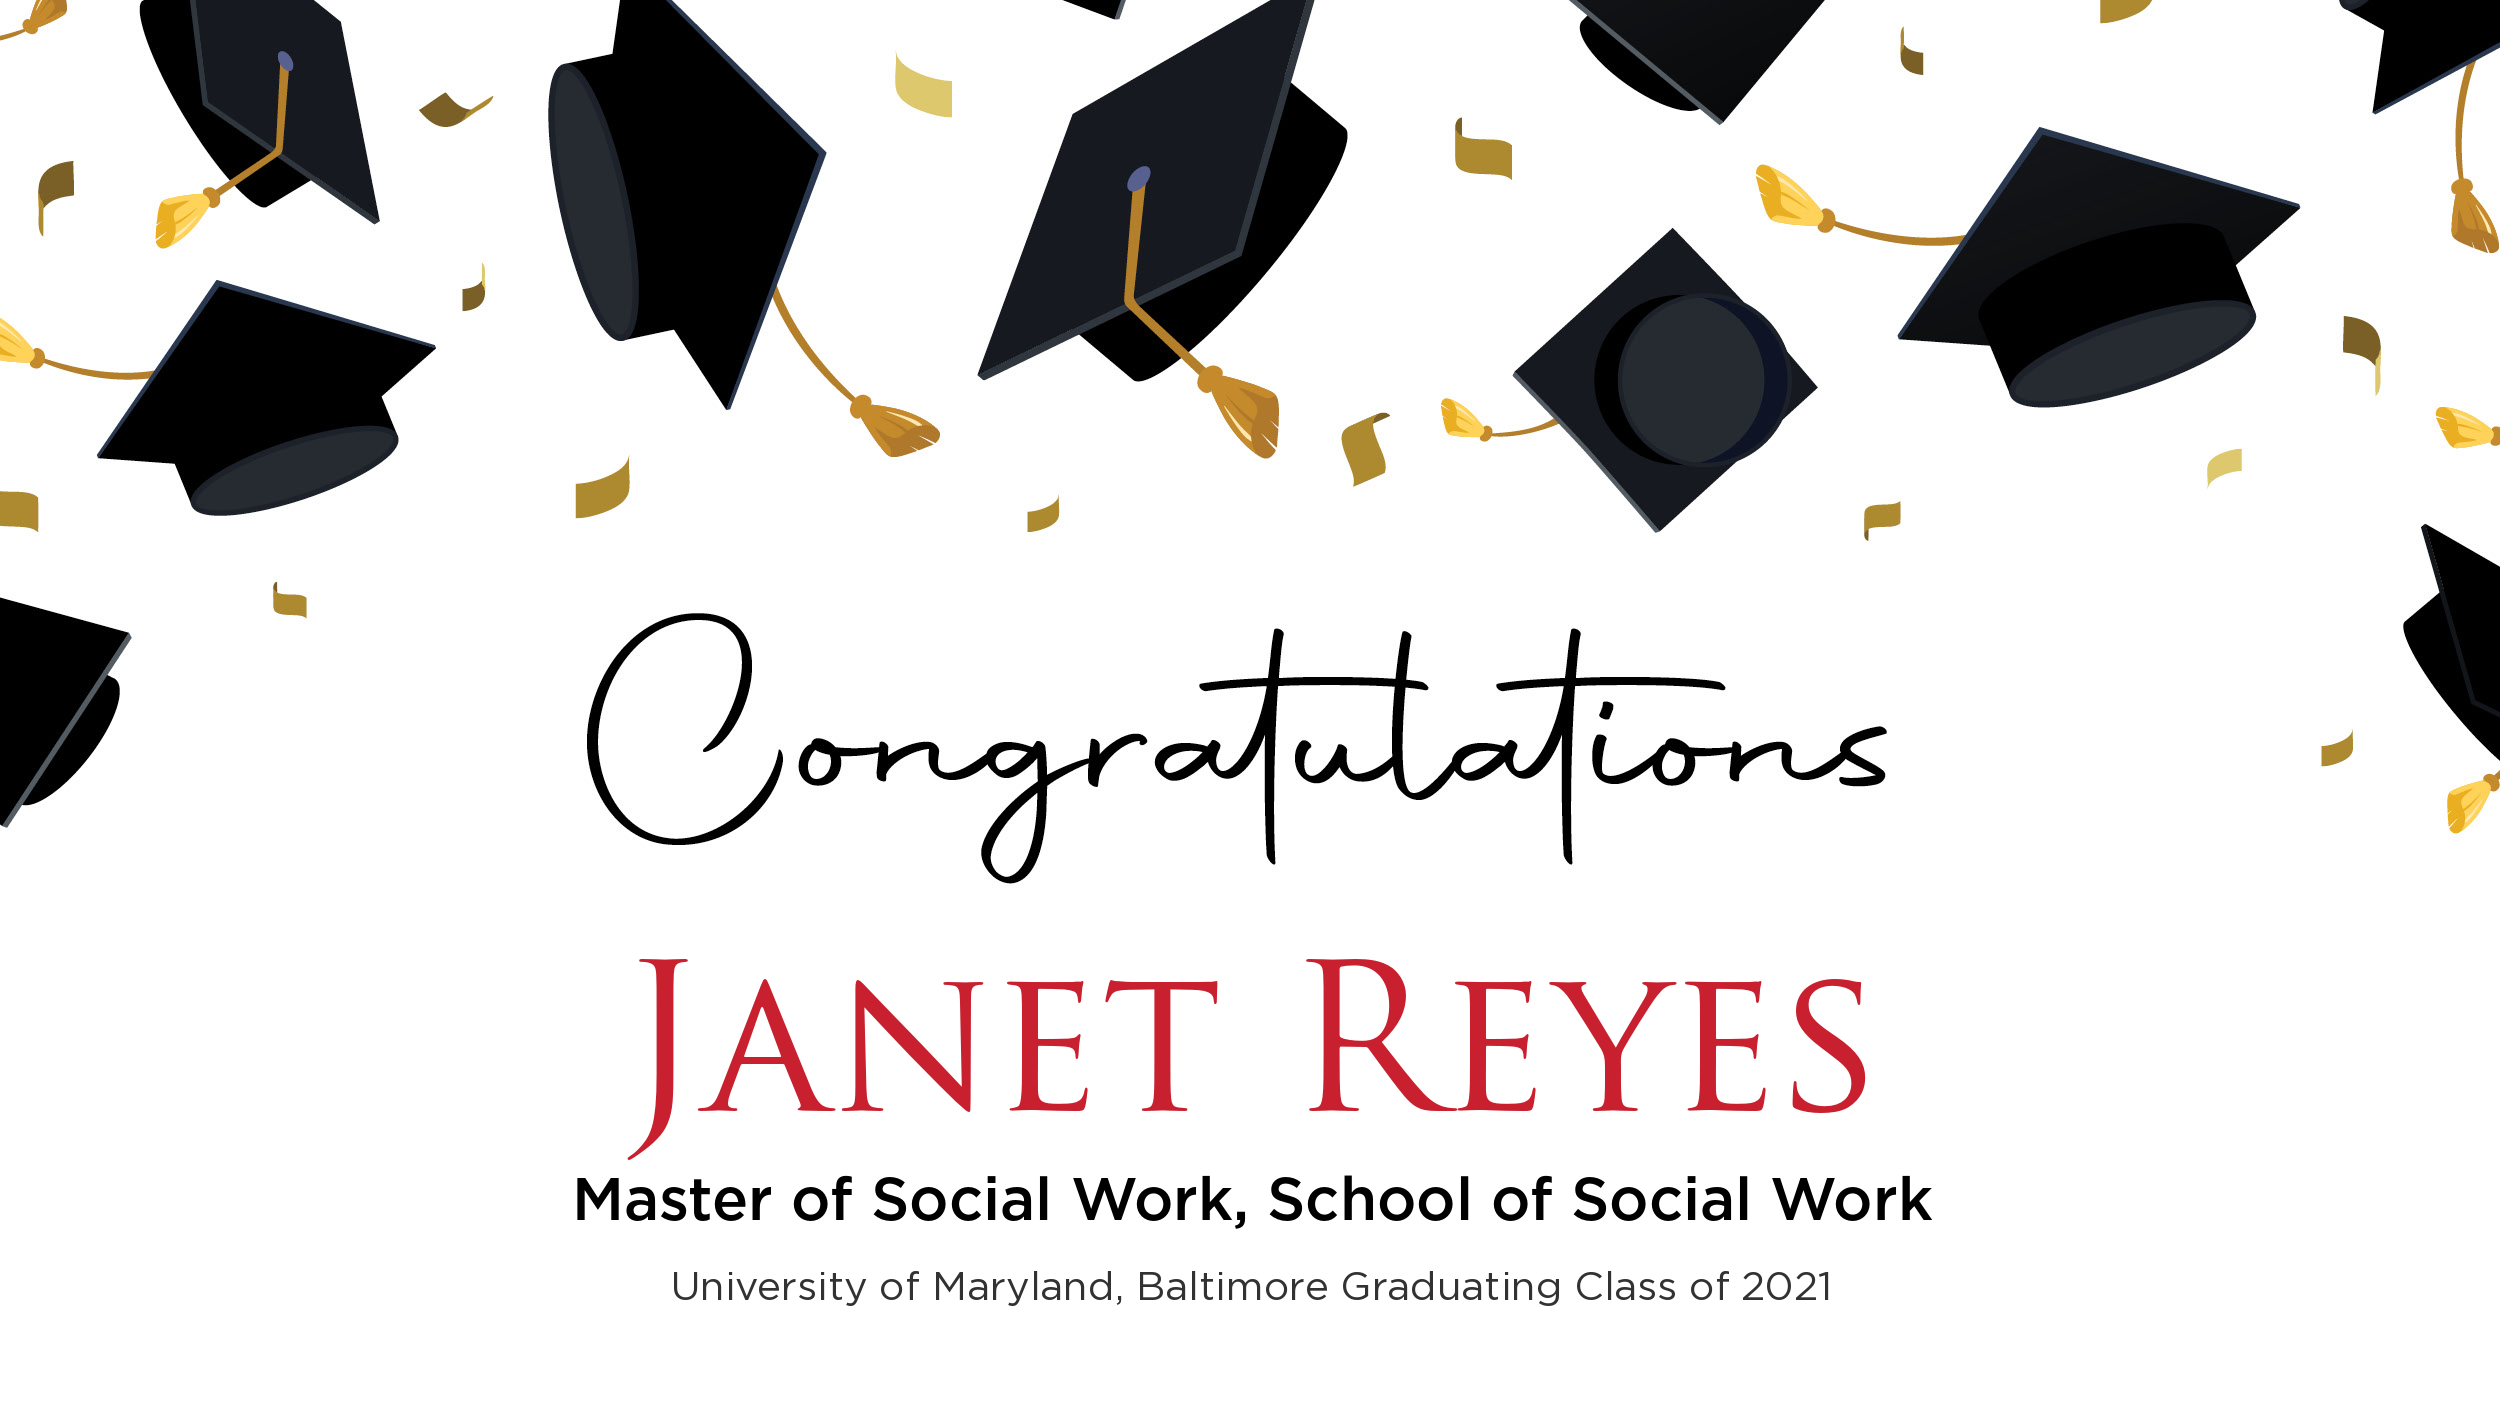 Congratulations Janet Reyes, Master of Social Work